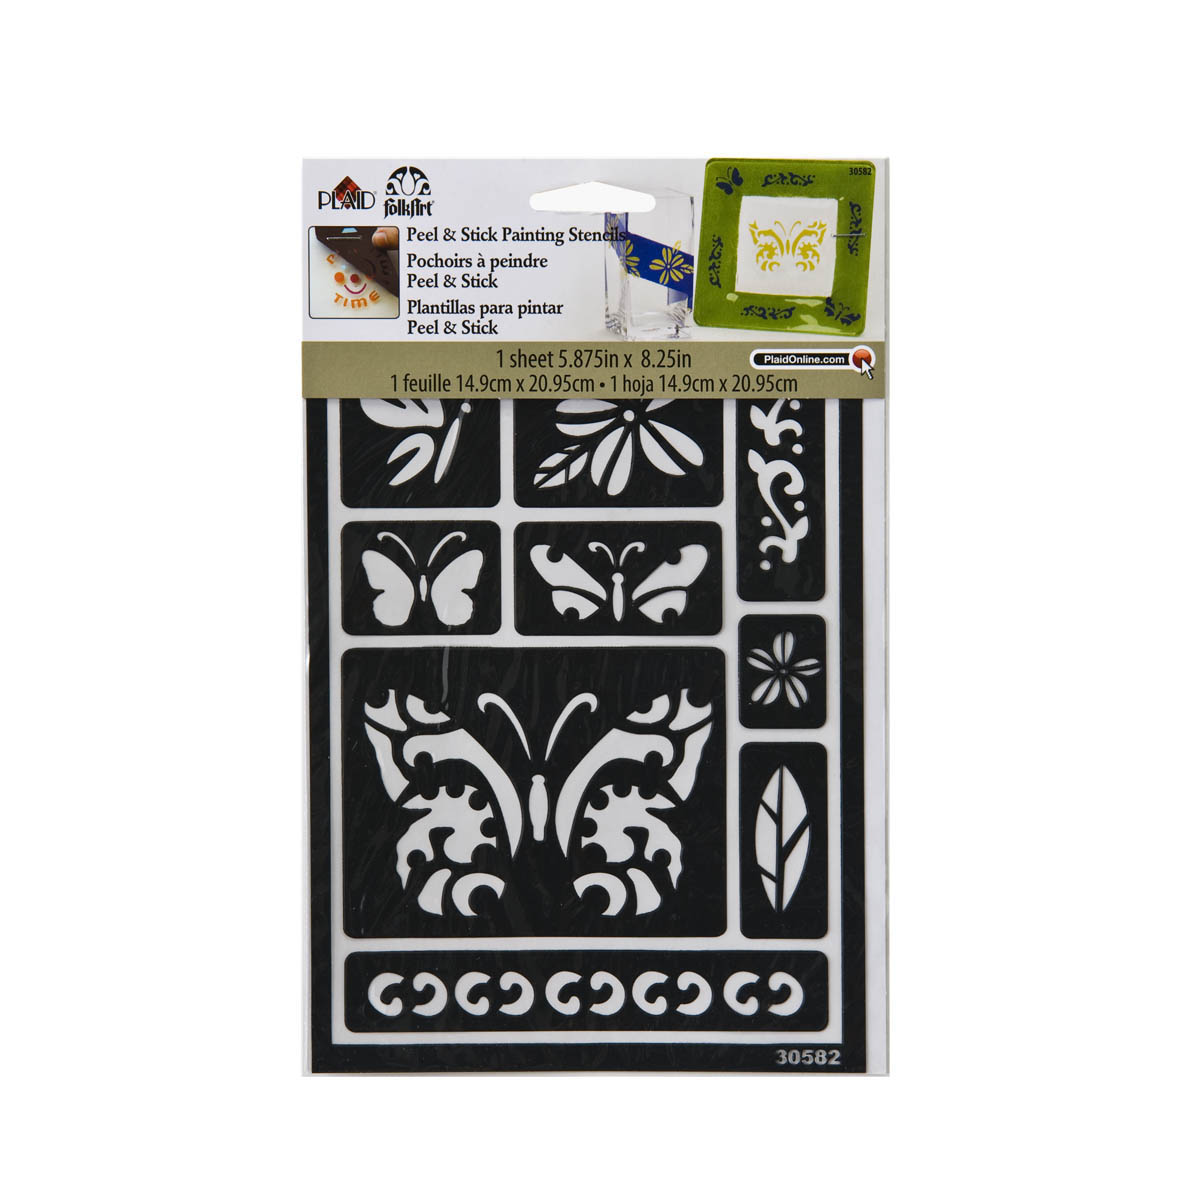 FolkArt ® Peel & Stick Painting Stencils™ - Butterfly - 30582